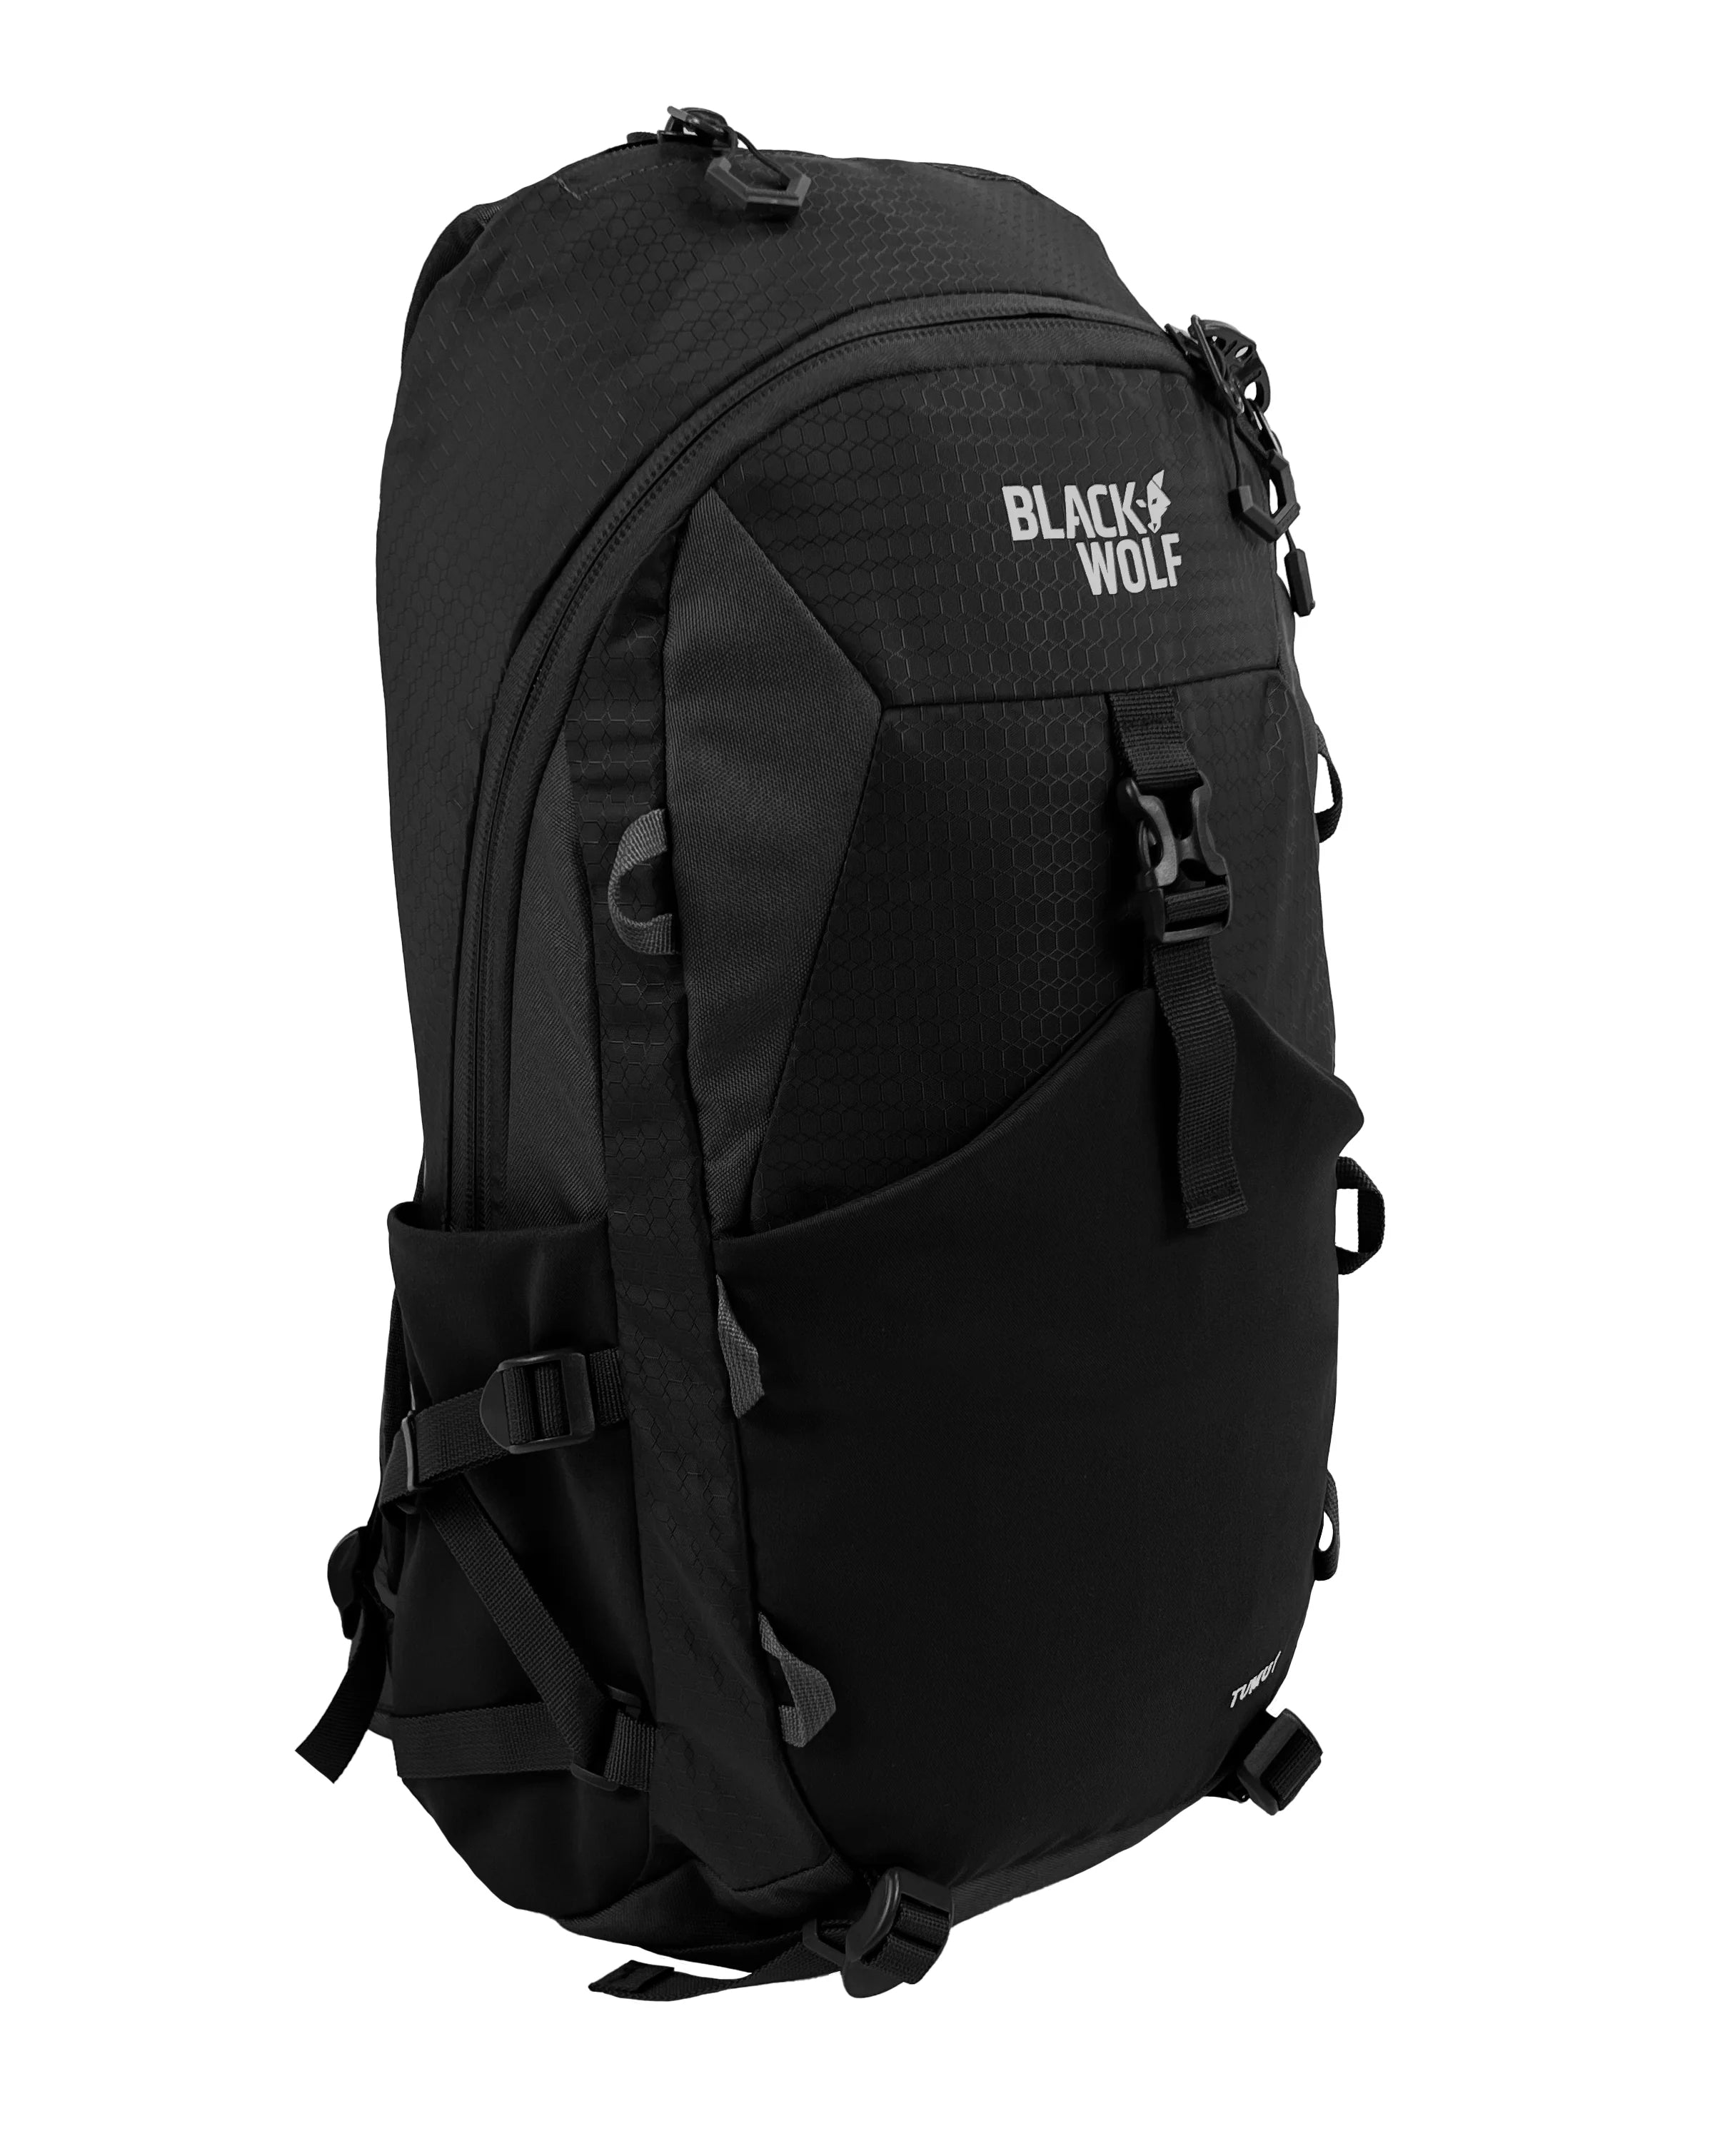 BlackWolf Tumut Backpack - 25 Litres